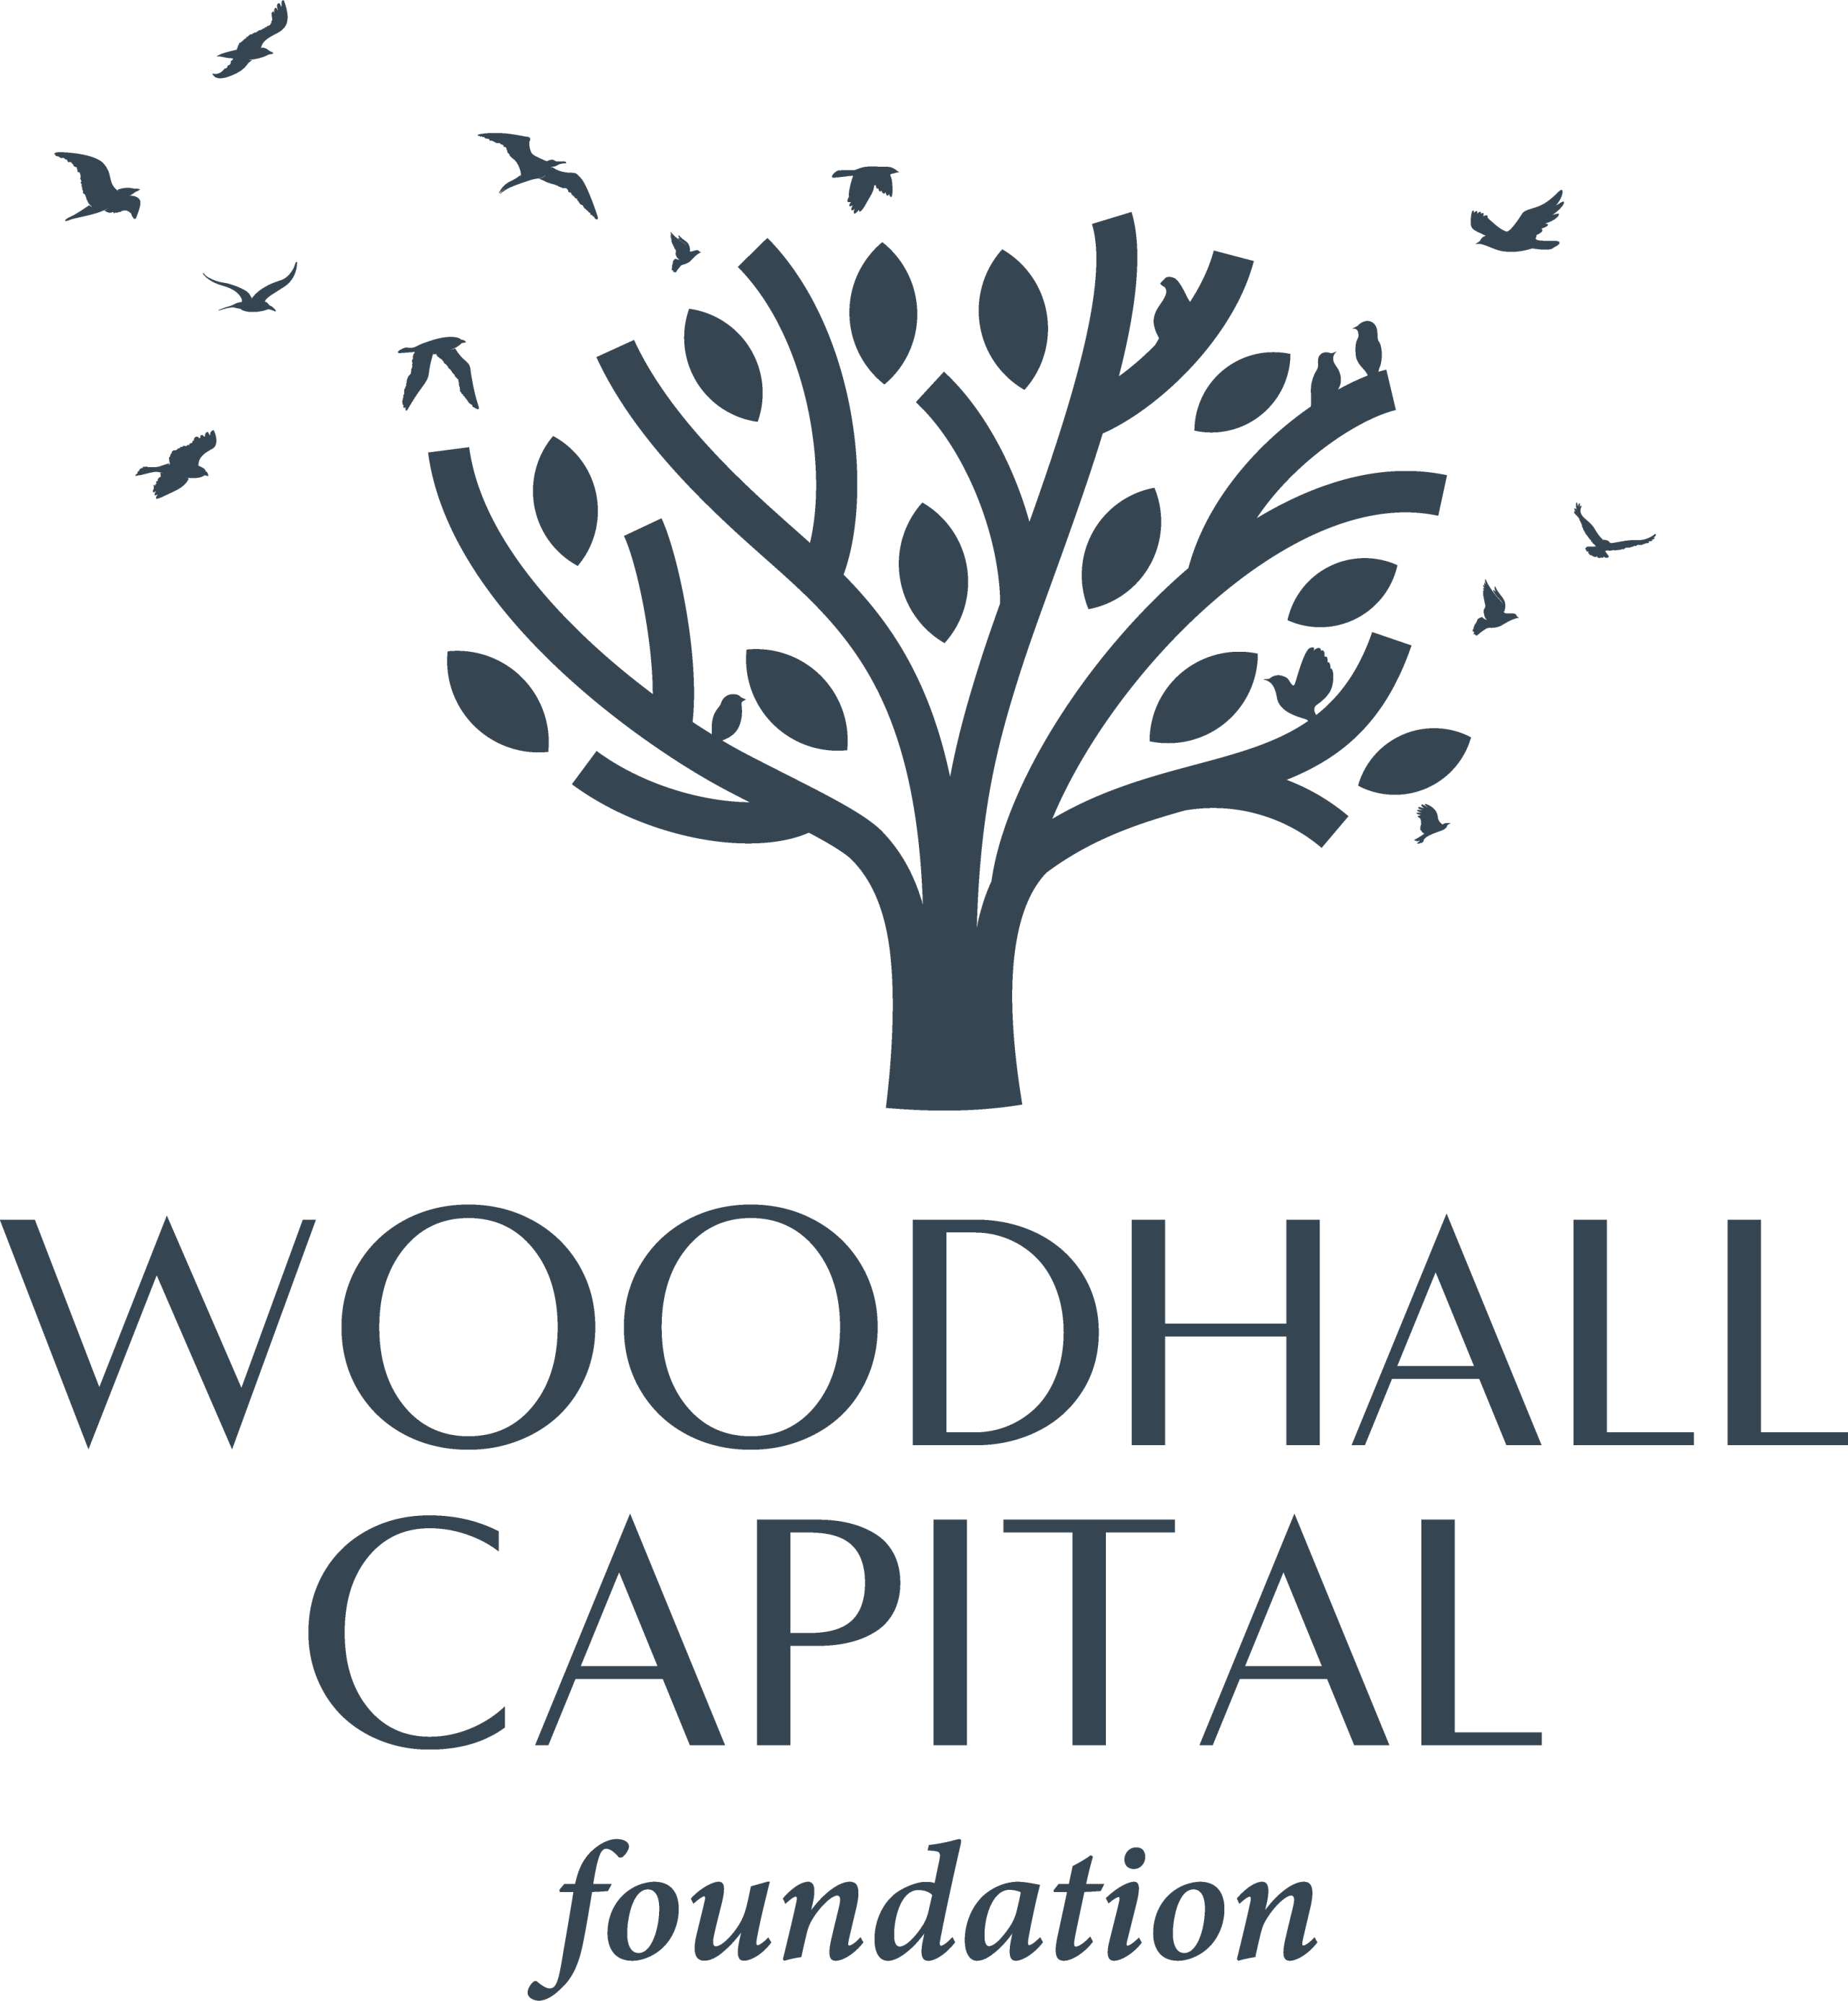 Woodhall Capital Foundation